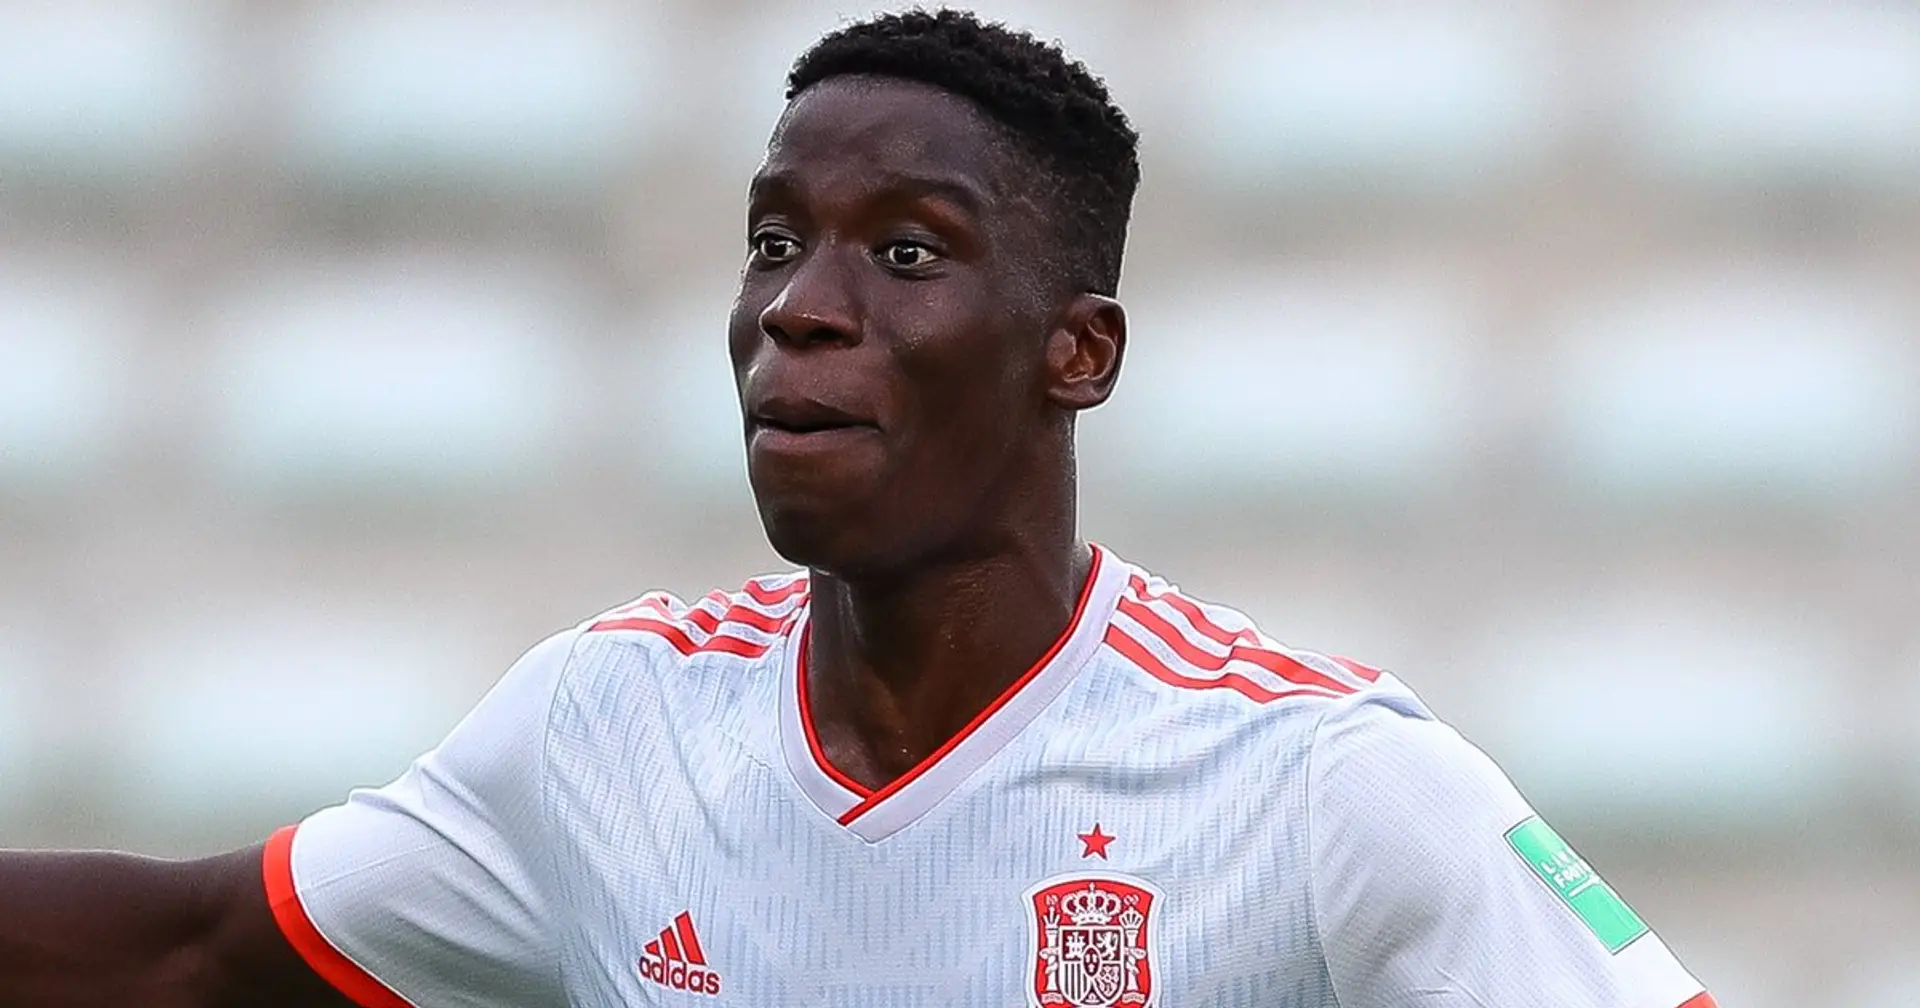 JUST IN: Moriba dumps Spanish national team, chooses to represent Guinea